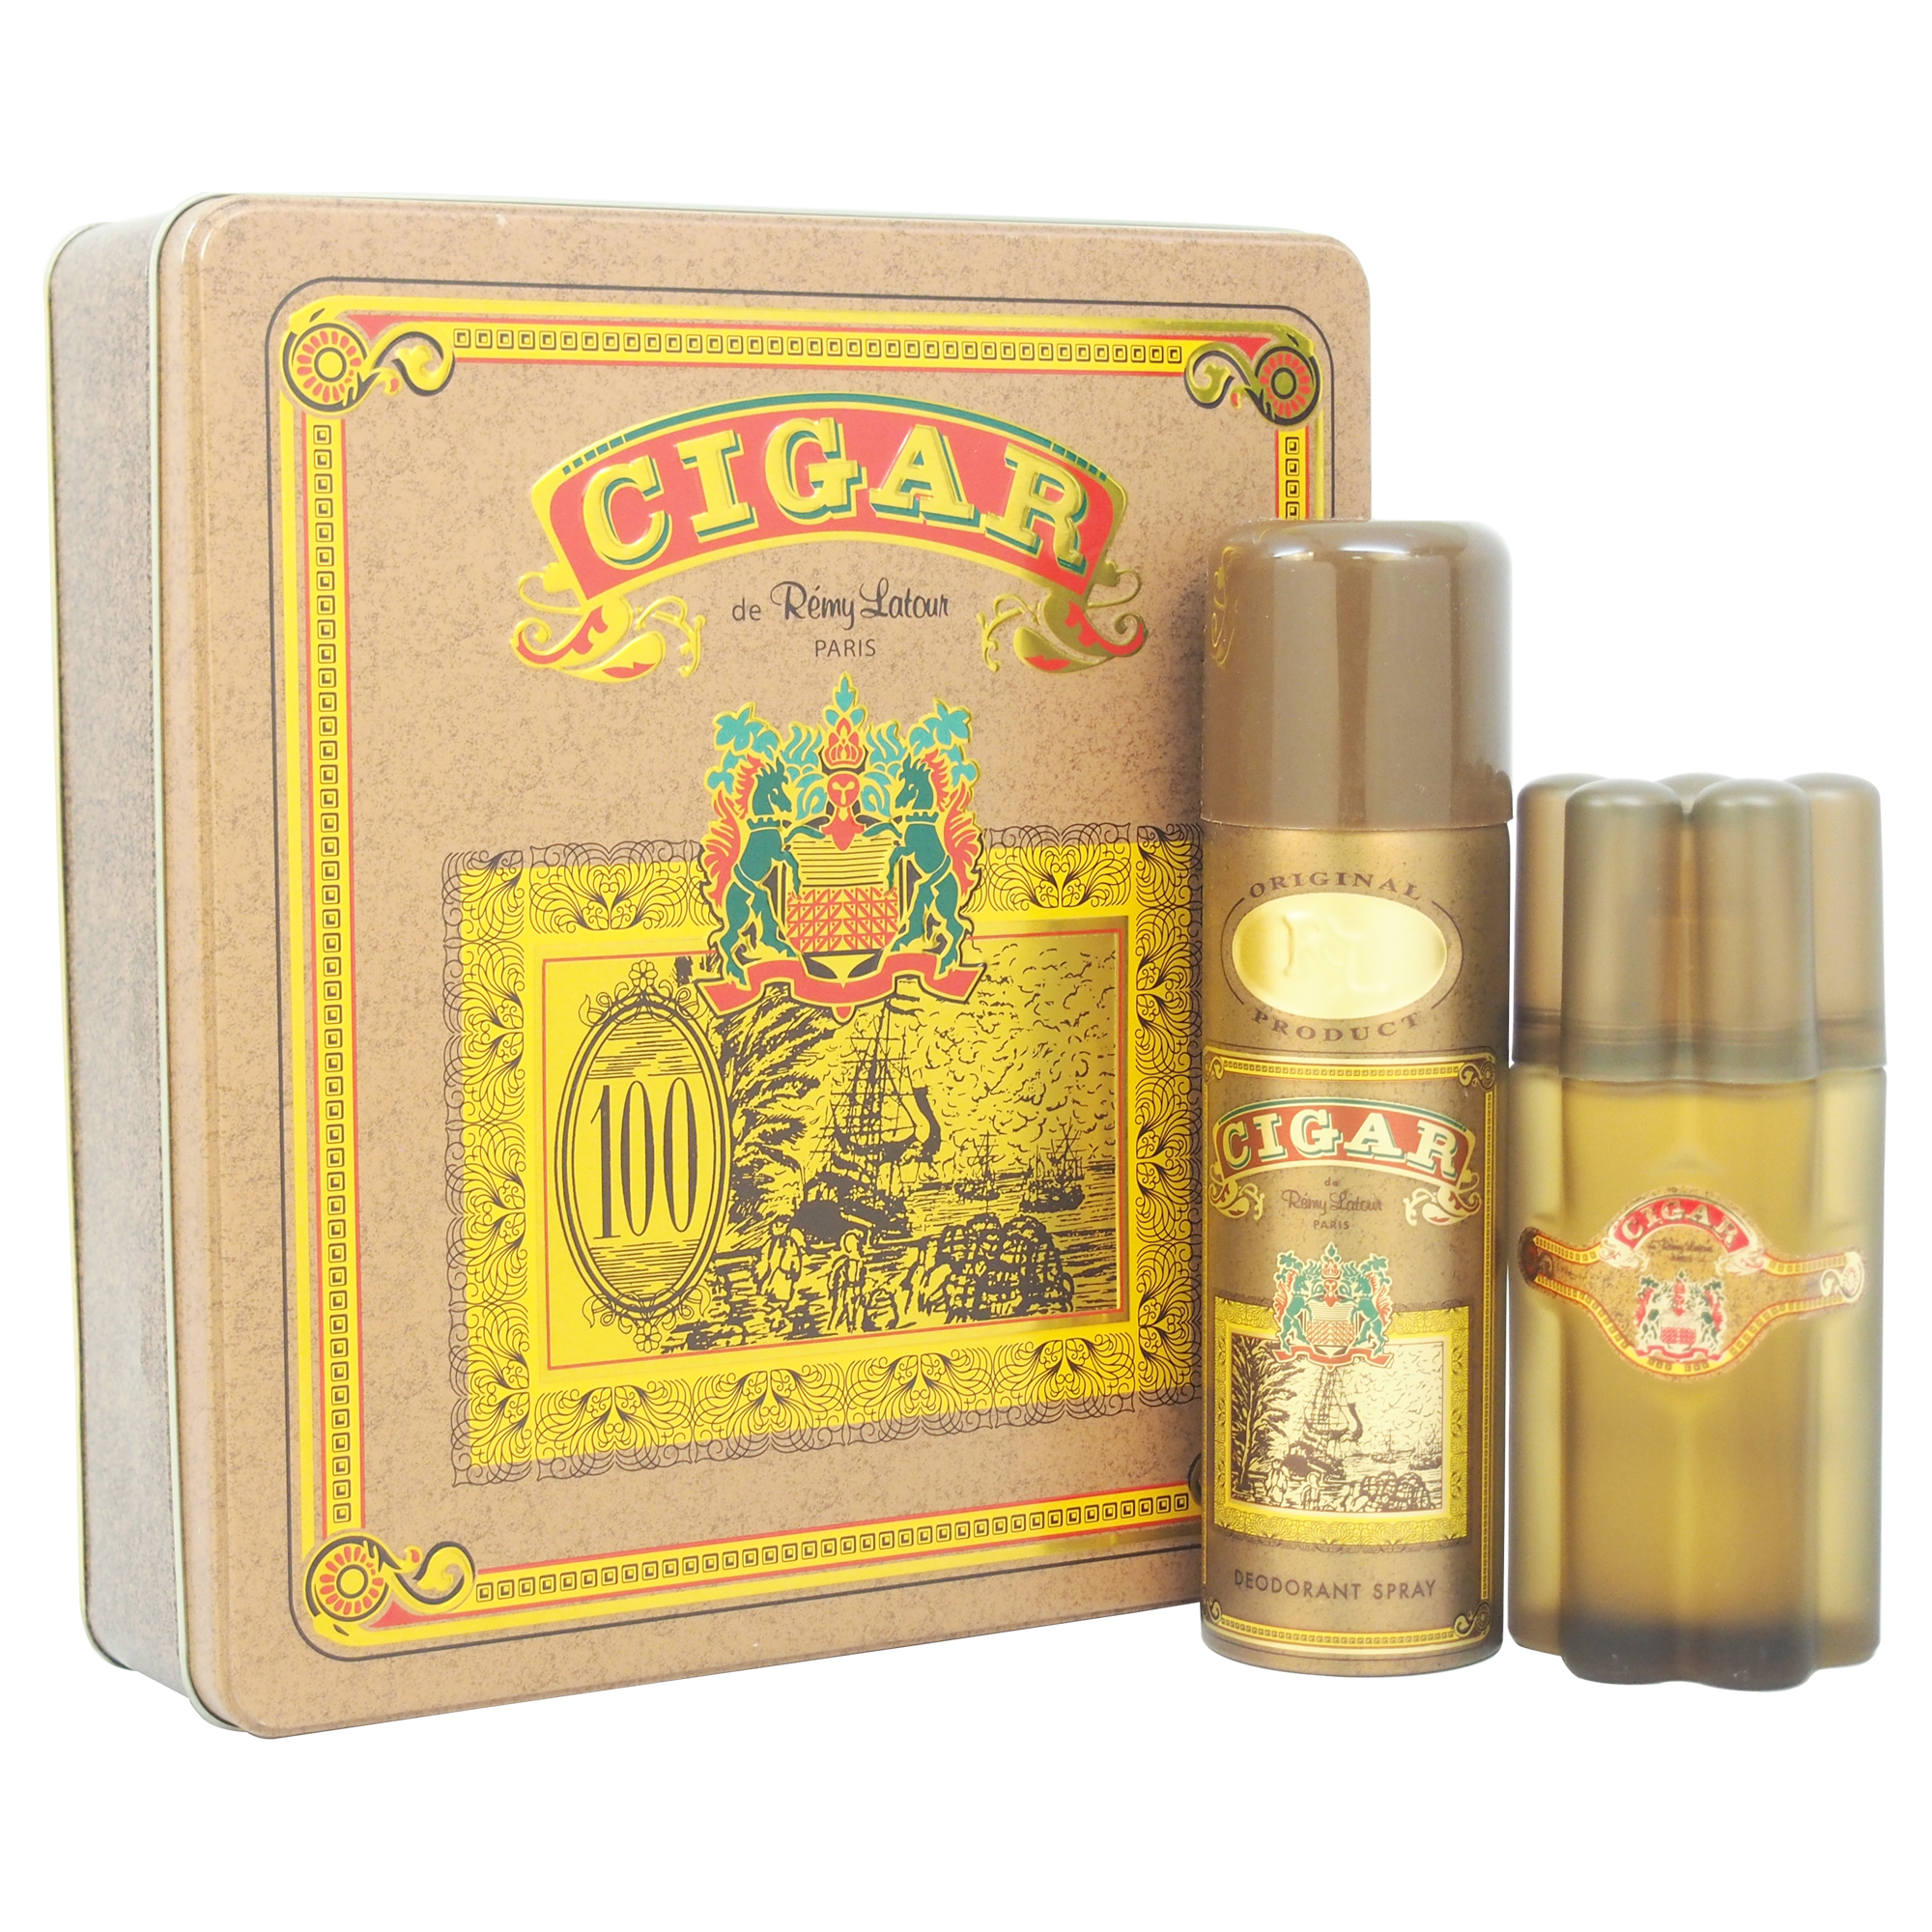 Cigar by Remy Latour for Men - 2 Pc Gift Set 3.3oz EDT Spray, 6.6oz Deodorant Spray